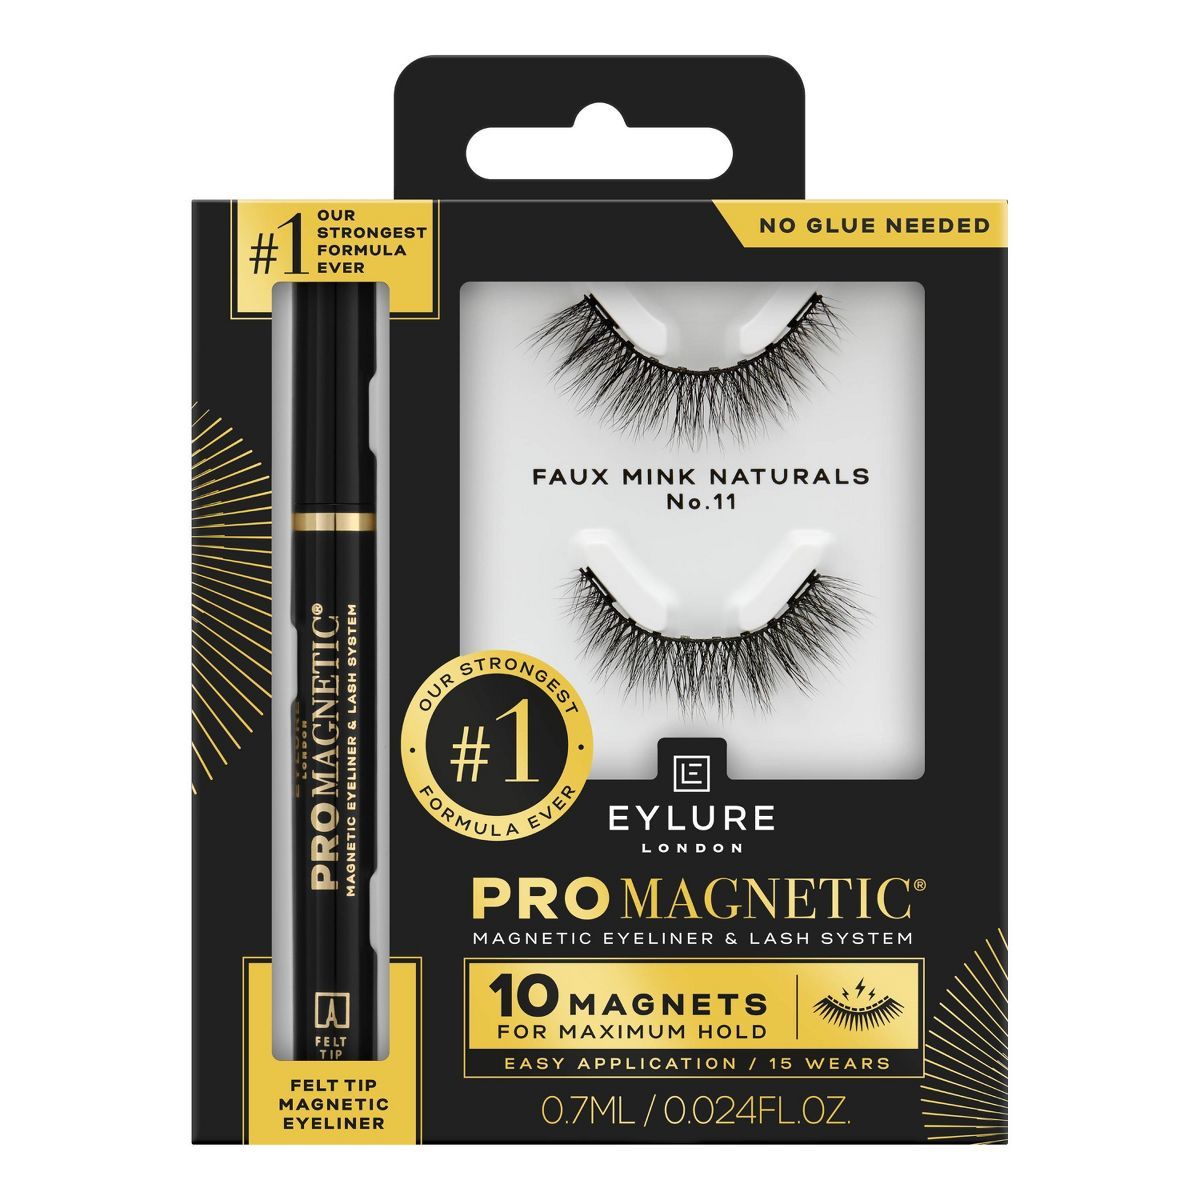 Eylure Promagnetic 10 Magnet Natural No. 11 False Eyelashes with Felt Tip Eyeliner - 1 Pair | Target